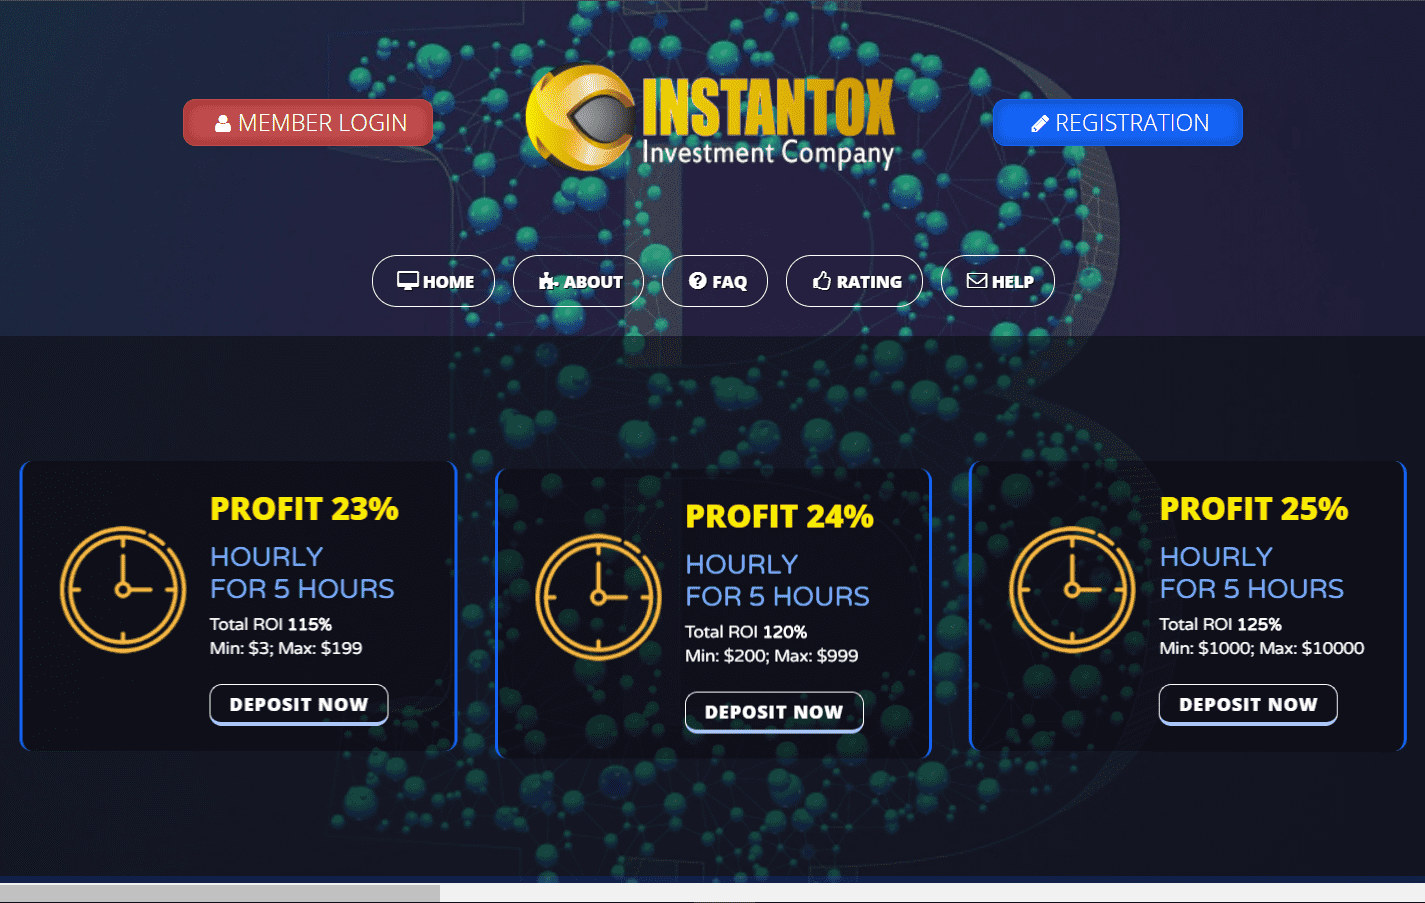 Instantox Investment